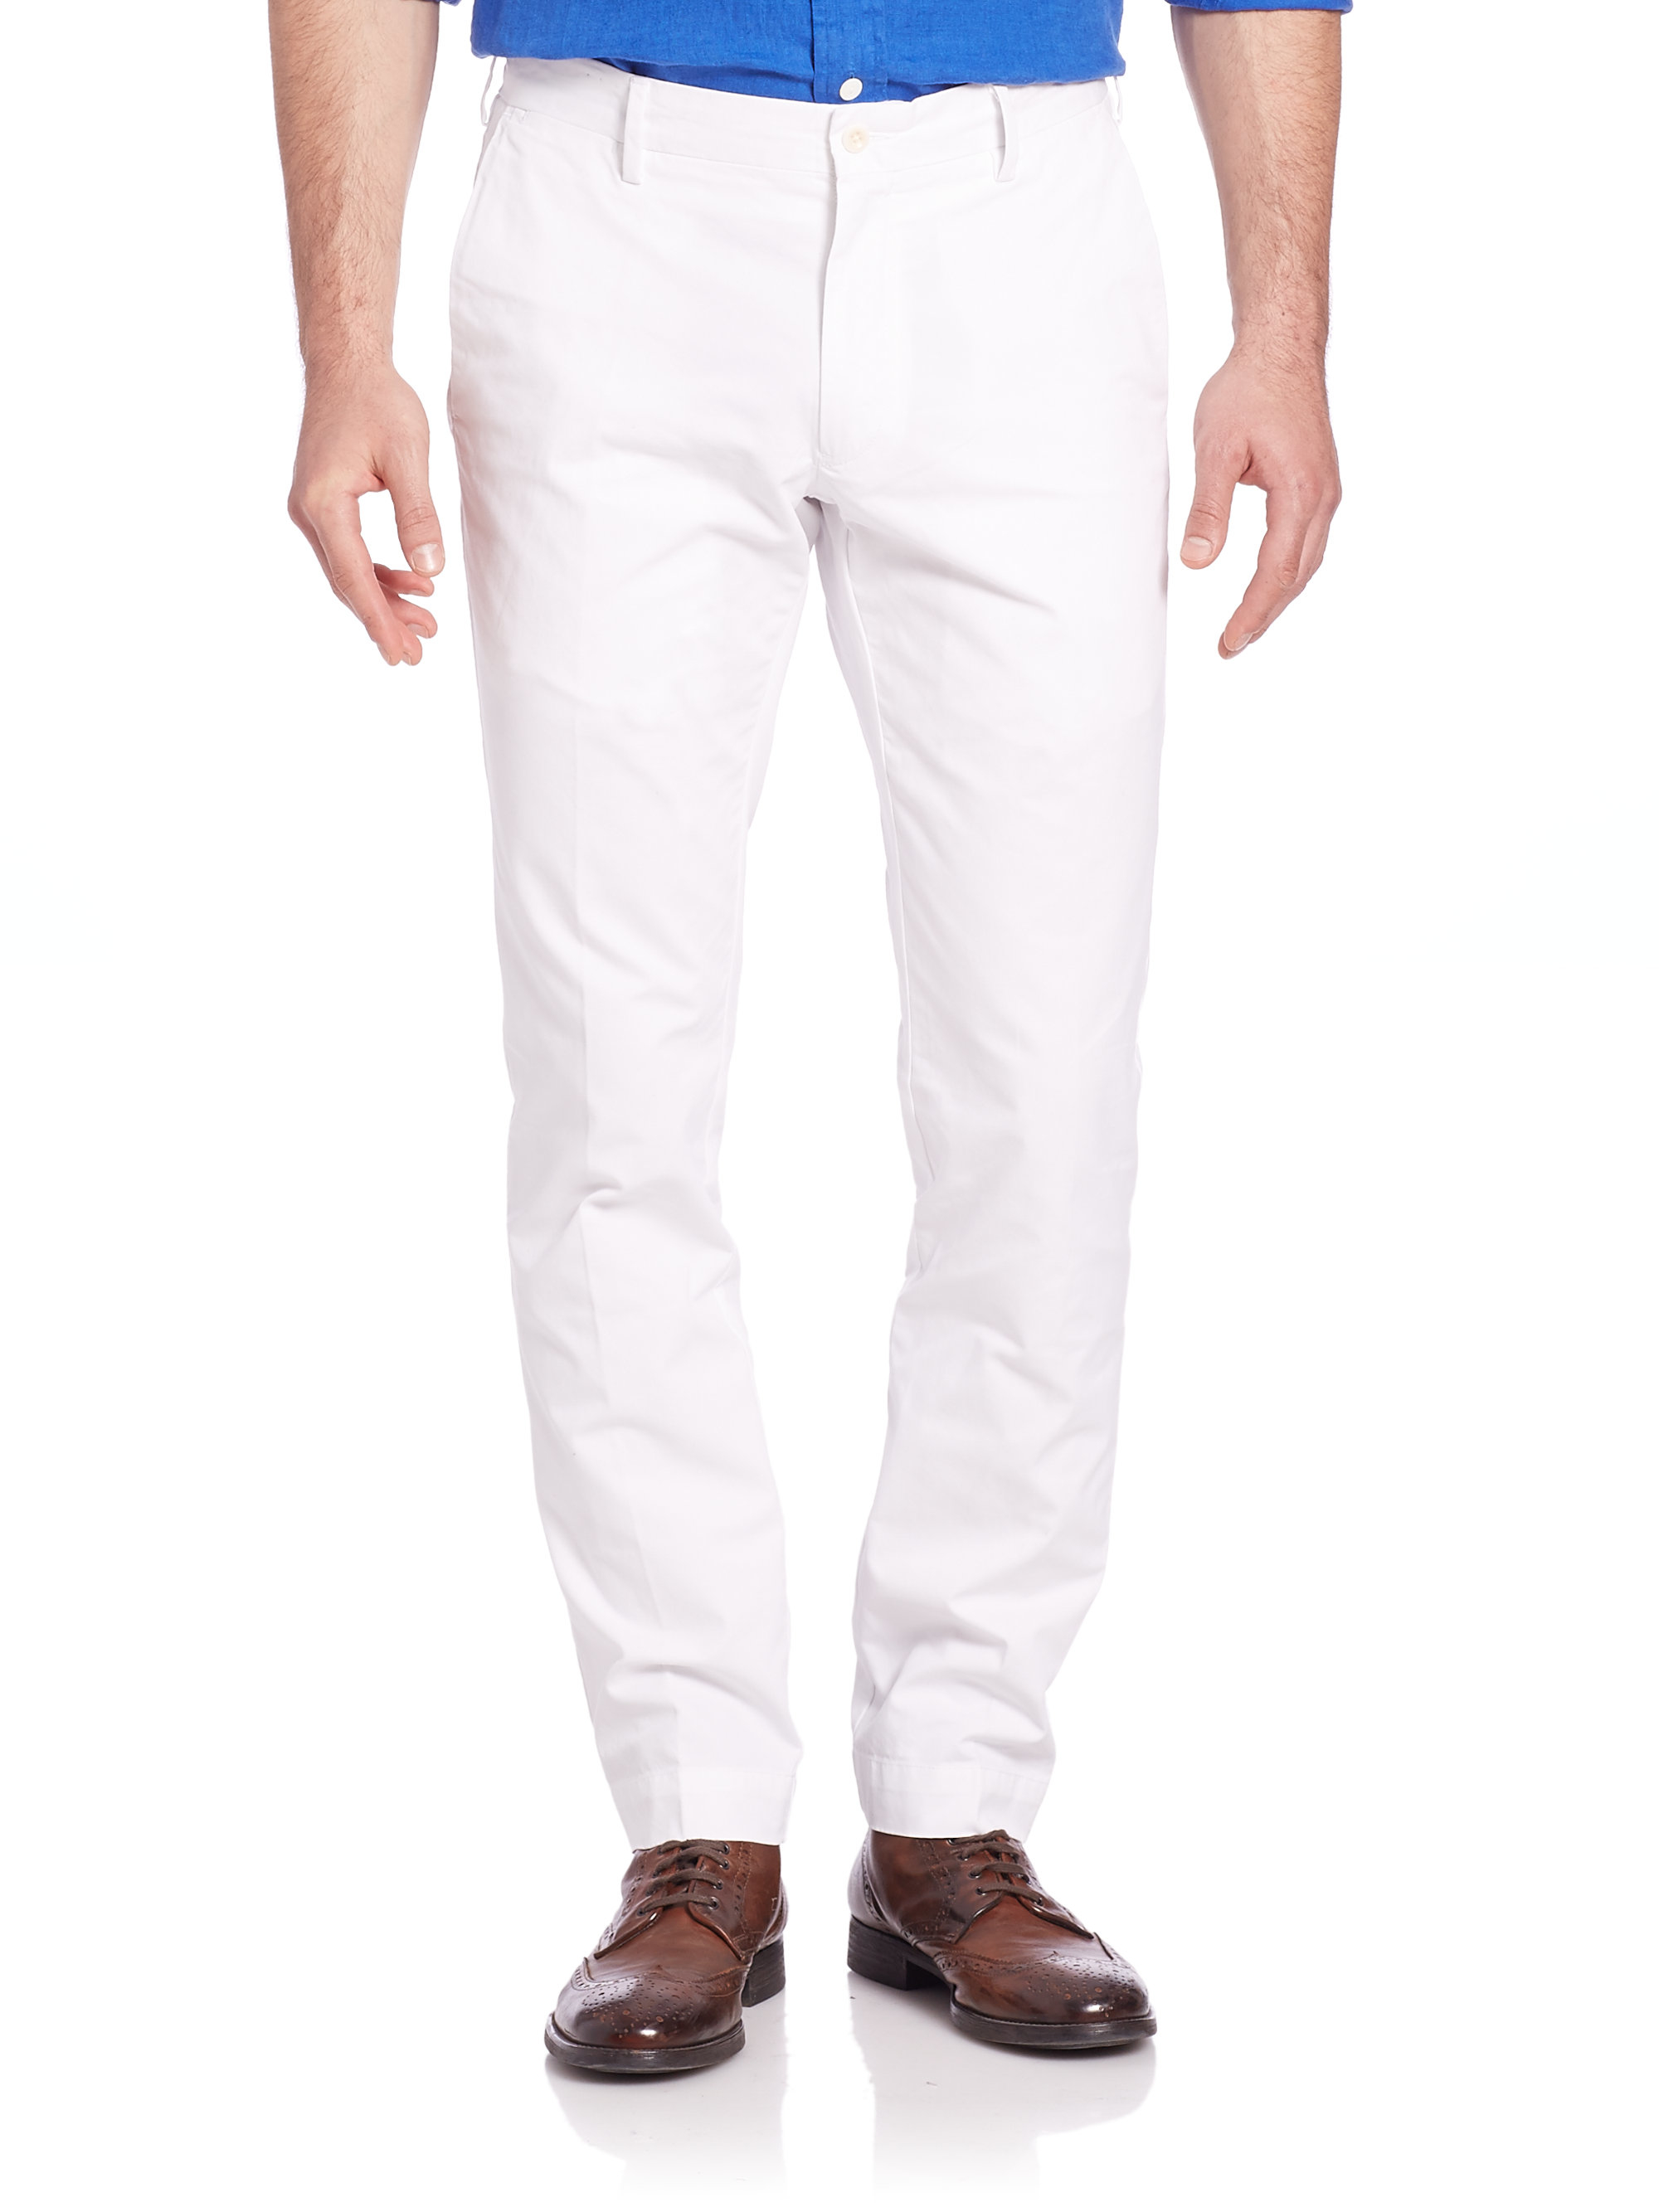 Polo Ralph Lauren Slim-fit Newport Pants in White for Men - Lyst